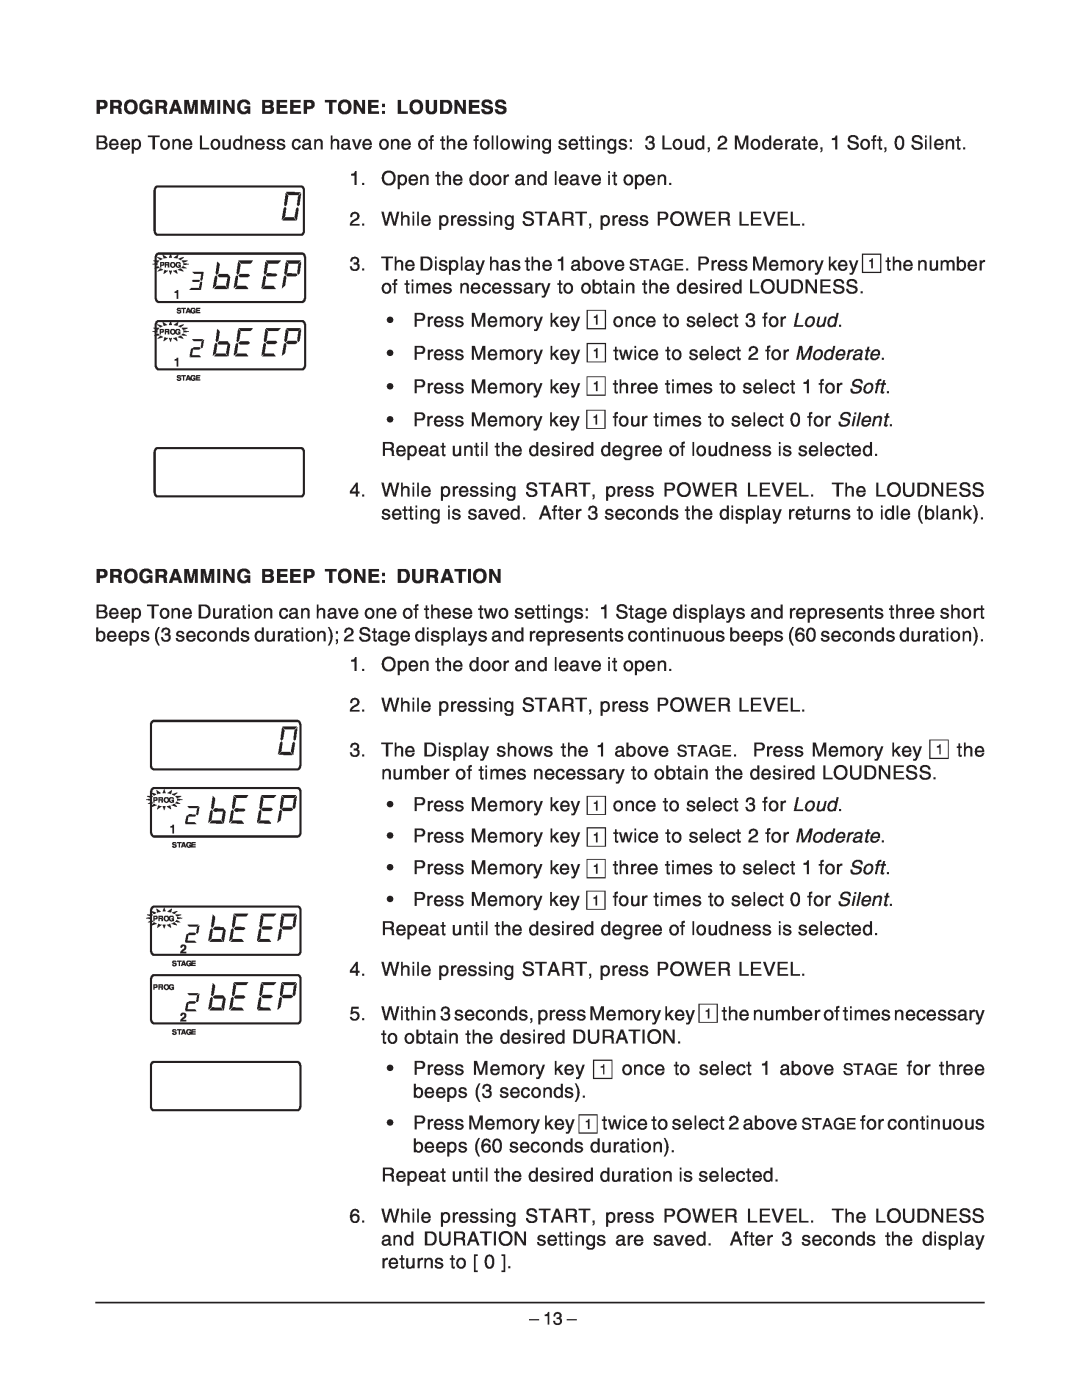 Hobart HM1200 manual Programming Beep Tone Loudness, Programming Beep Tone Duration 